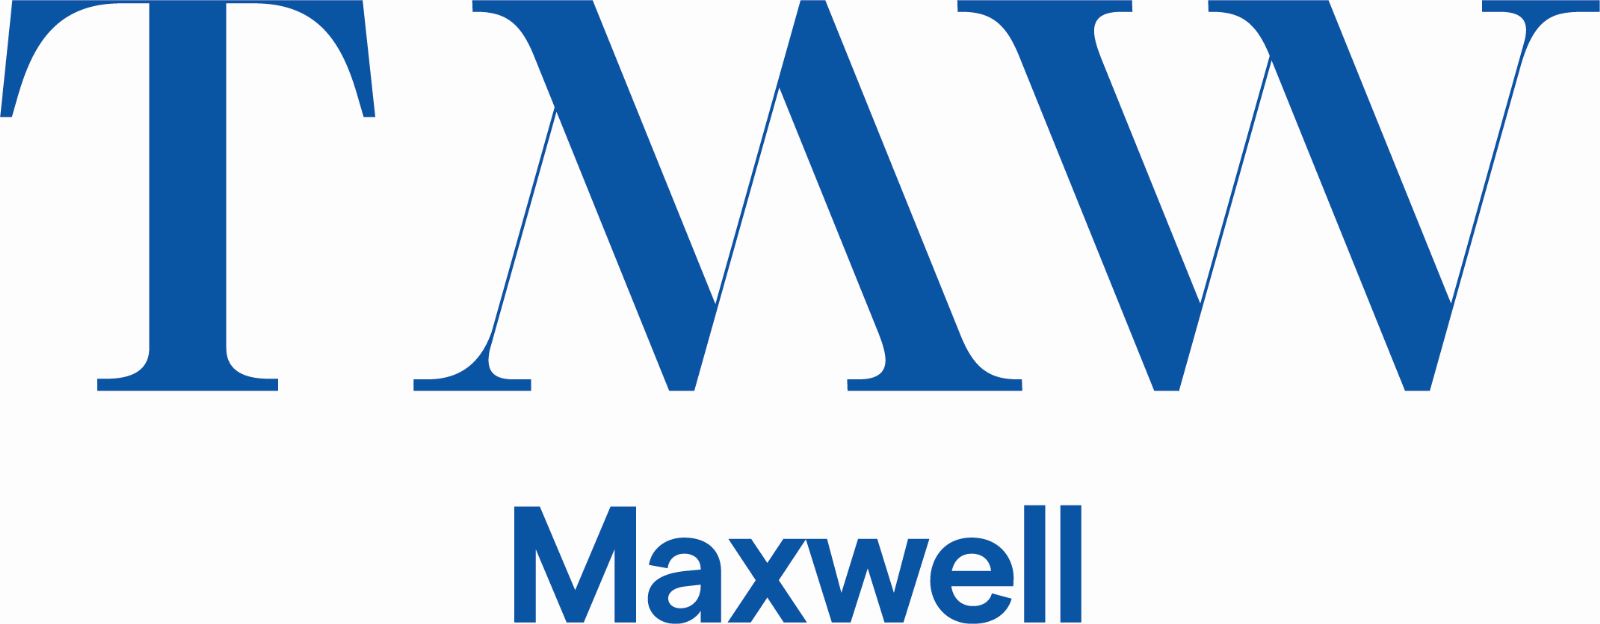 TMW Maxwell image